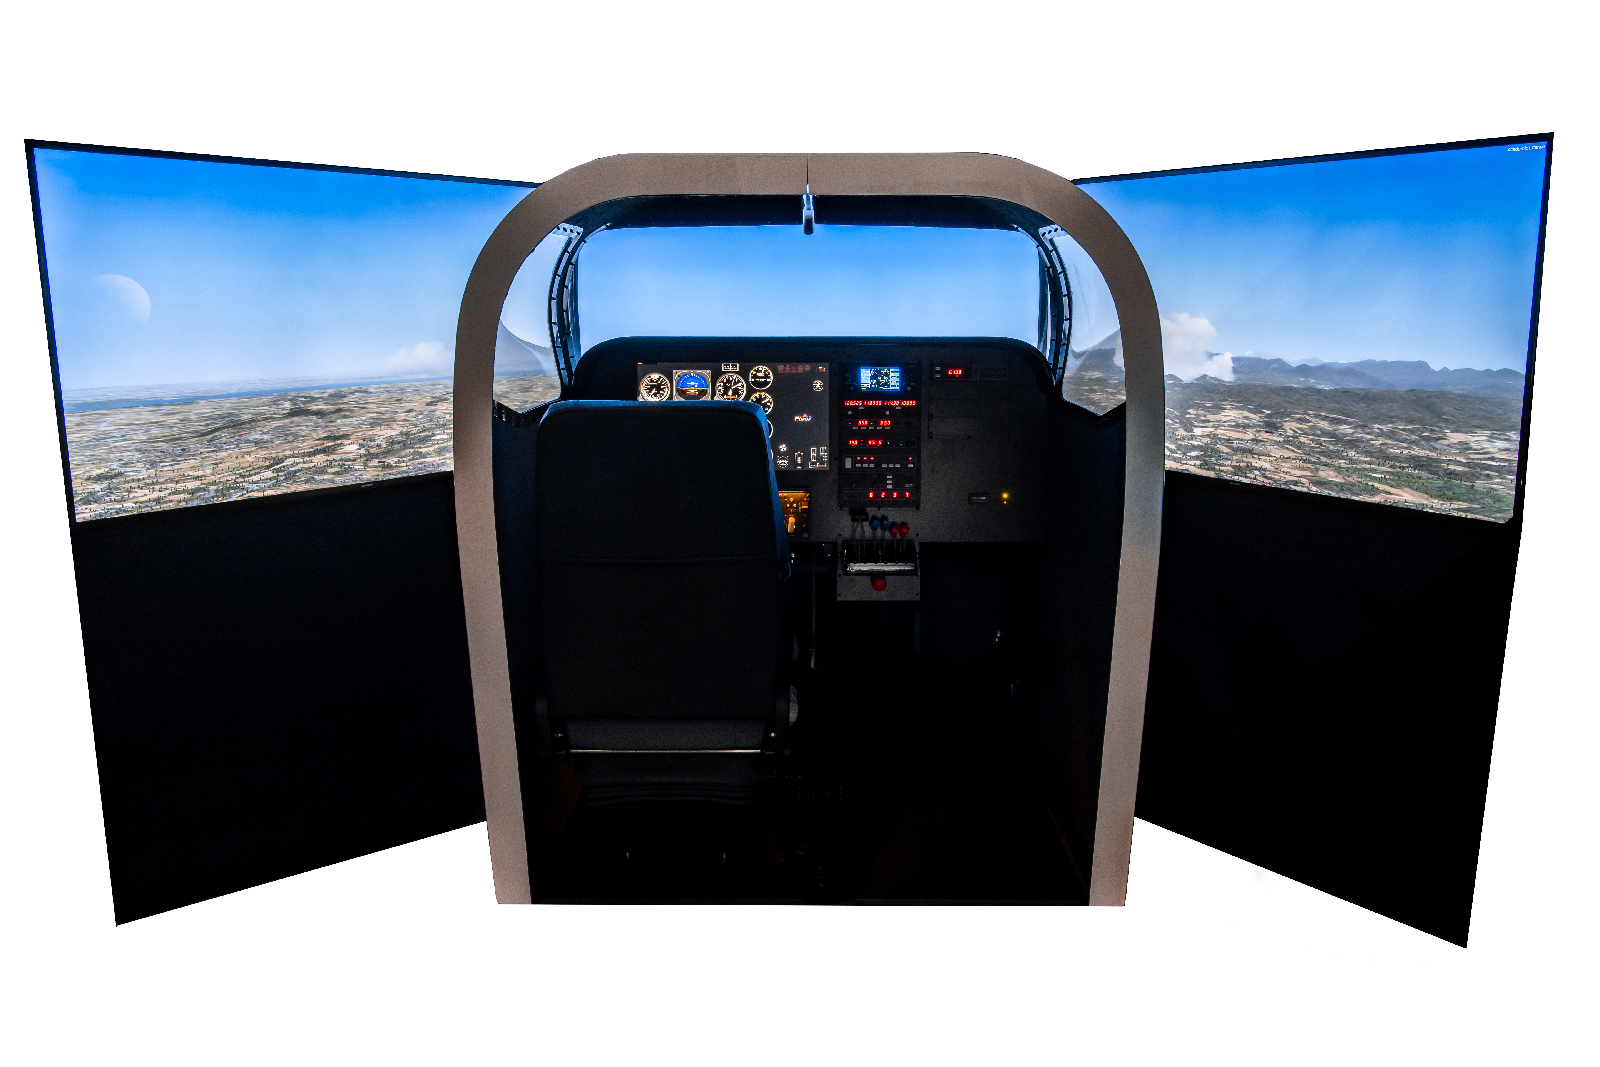 Flight Simulators Uk The Largest Website Of Professional Flight Simulators Simulation Equipment In The World